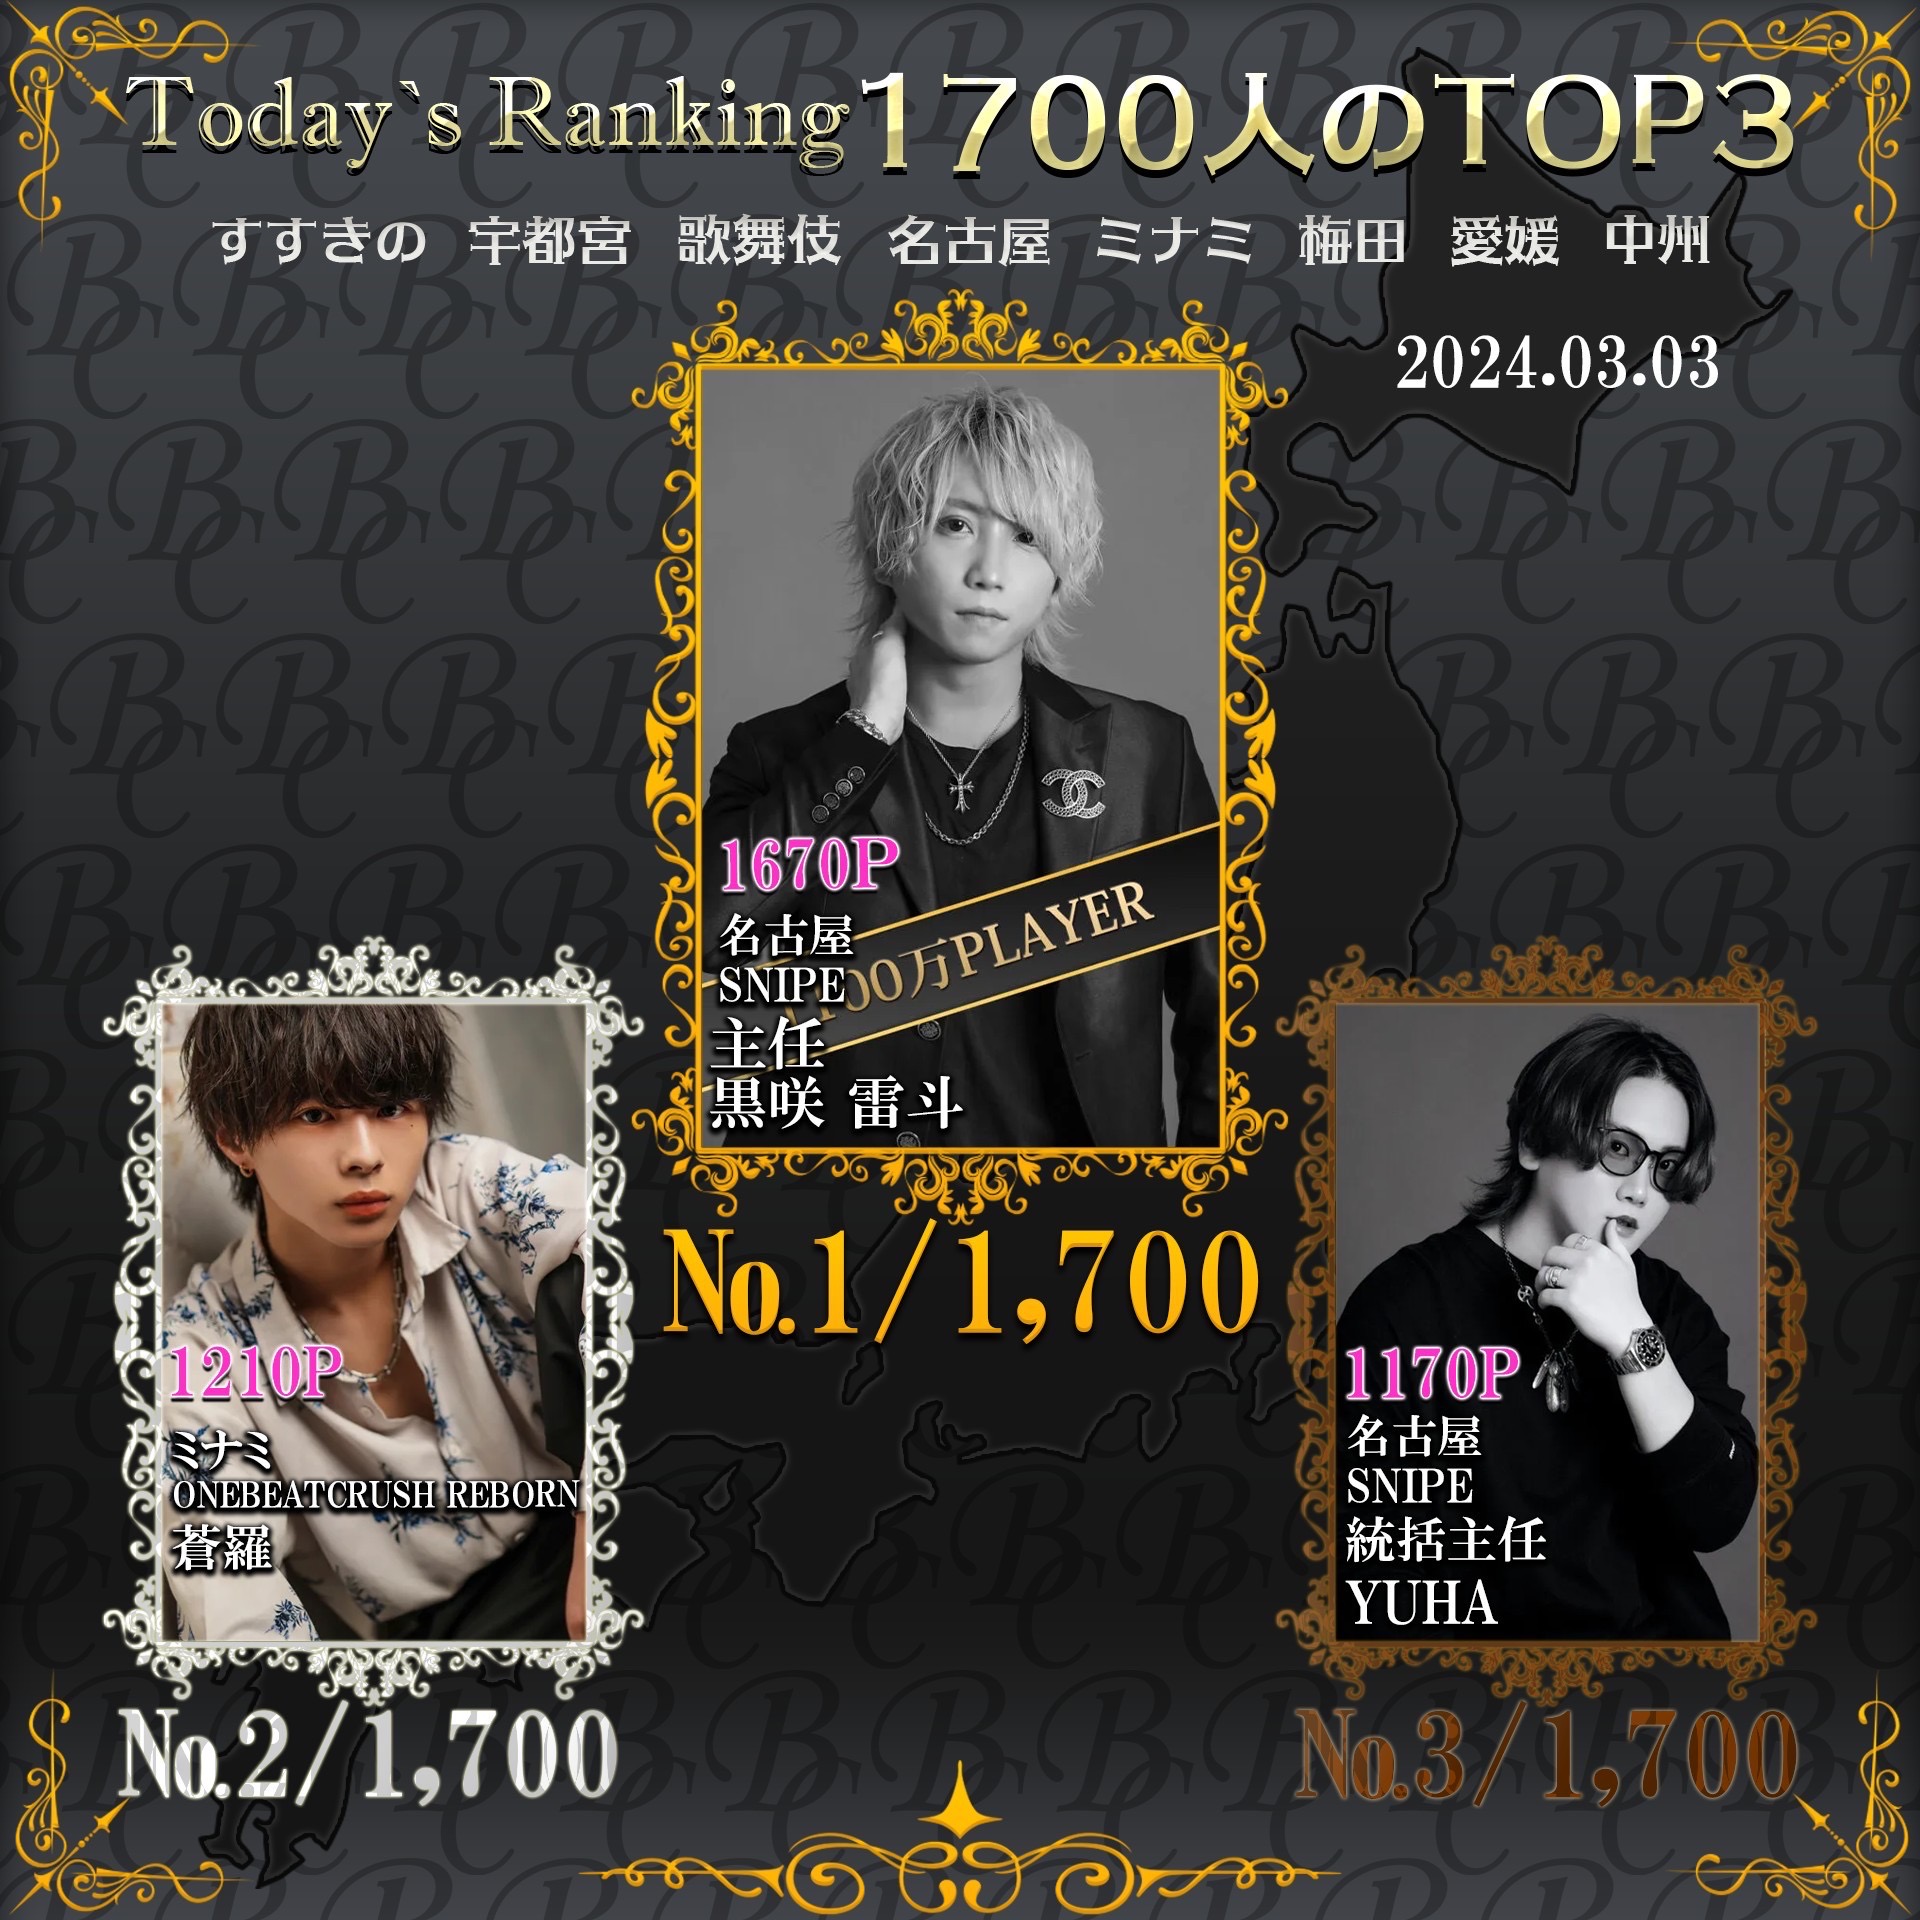 3/3 Today’s Ranking